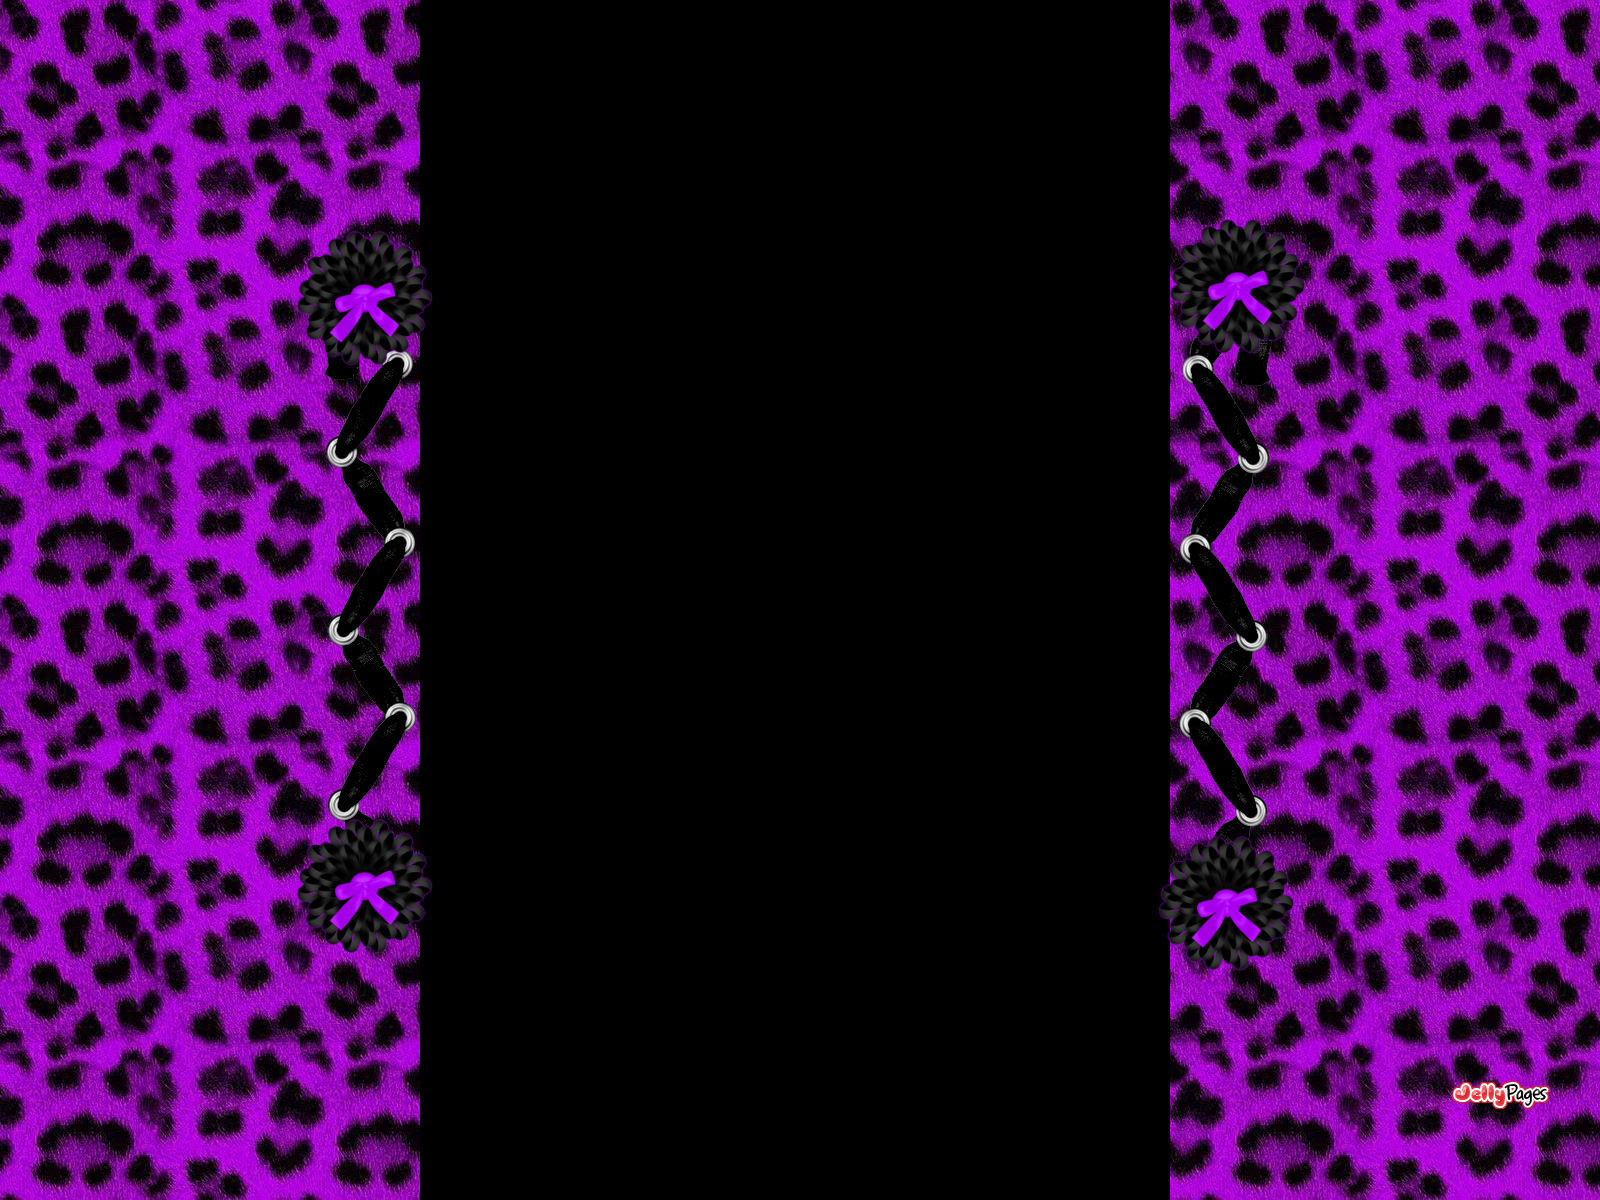 Purple-cheetah-wallpaper-10 42786 Images | Leeillo.com